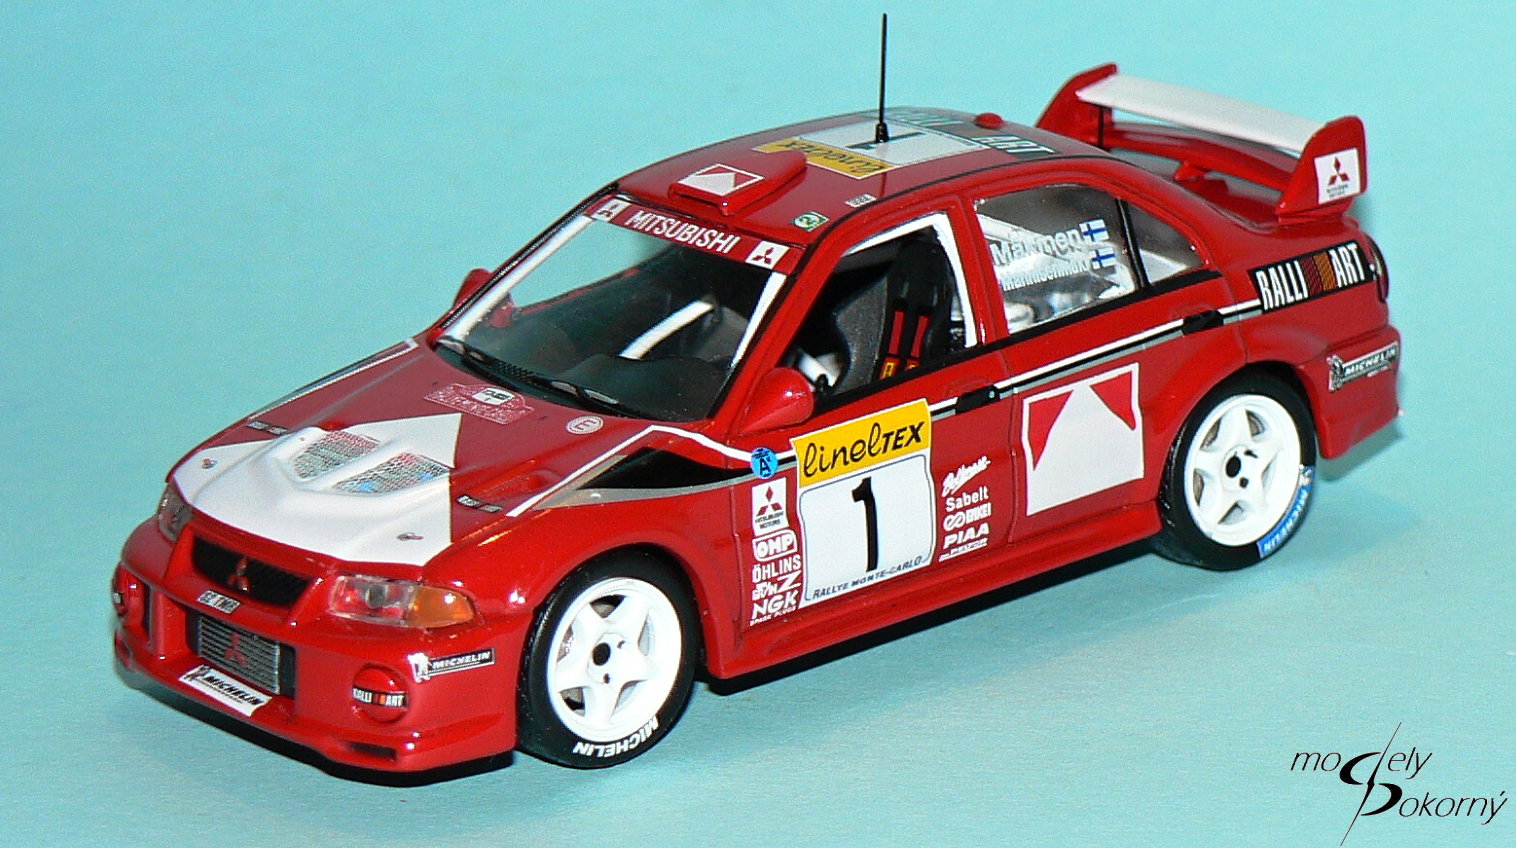 IXO MITSUBISHI LANCER EVO VI WRC RALLY TOMMI MAKINEN 1999 CAR MODEL RAM510 1:43 